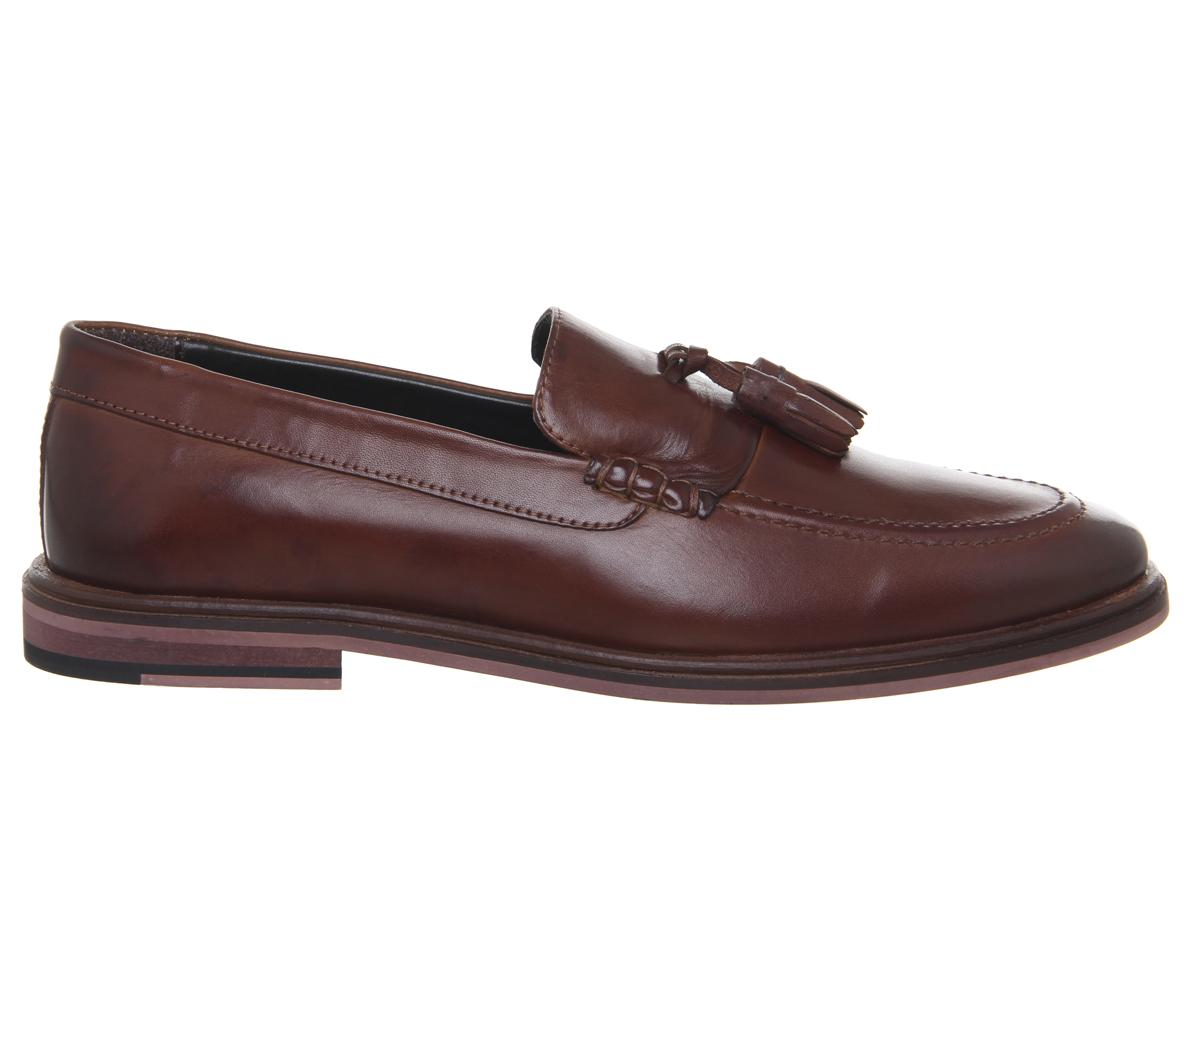 Walk London West Tassel Loafers Brown Leather - Men’s Smart Shoes